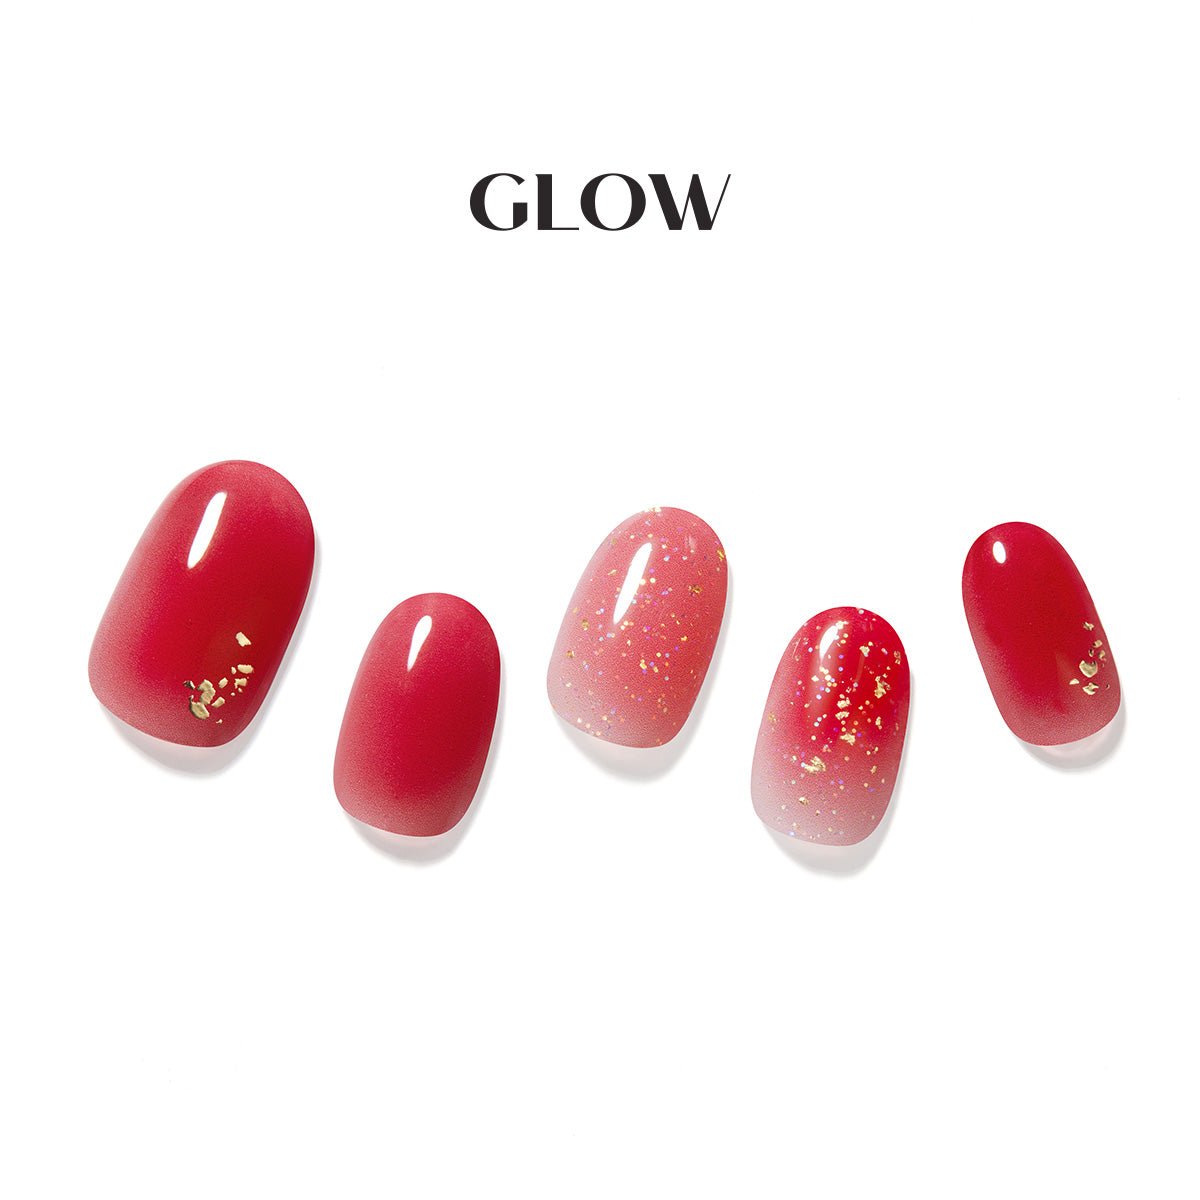 Strawberry Jam - Glow Gel Sticker - Manicure - Dashing Diva Singapore